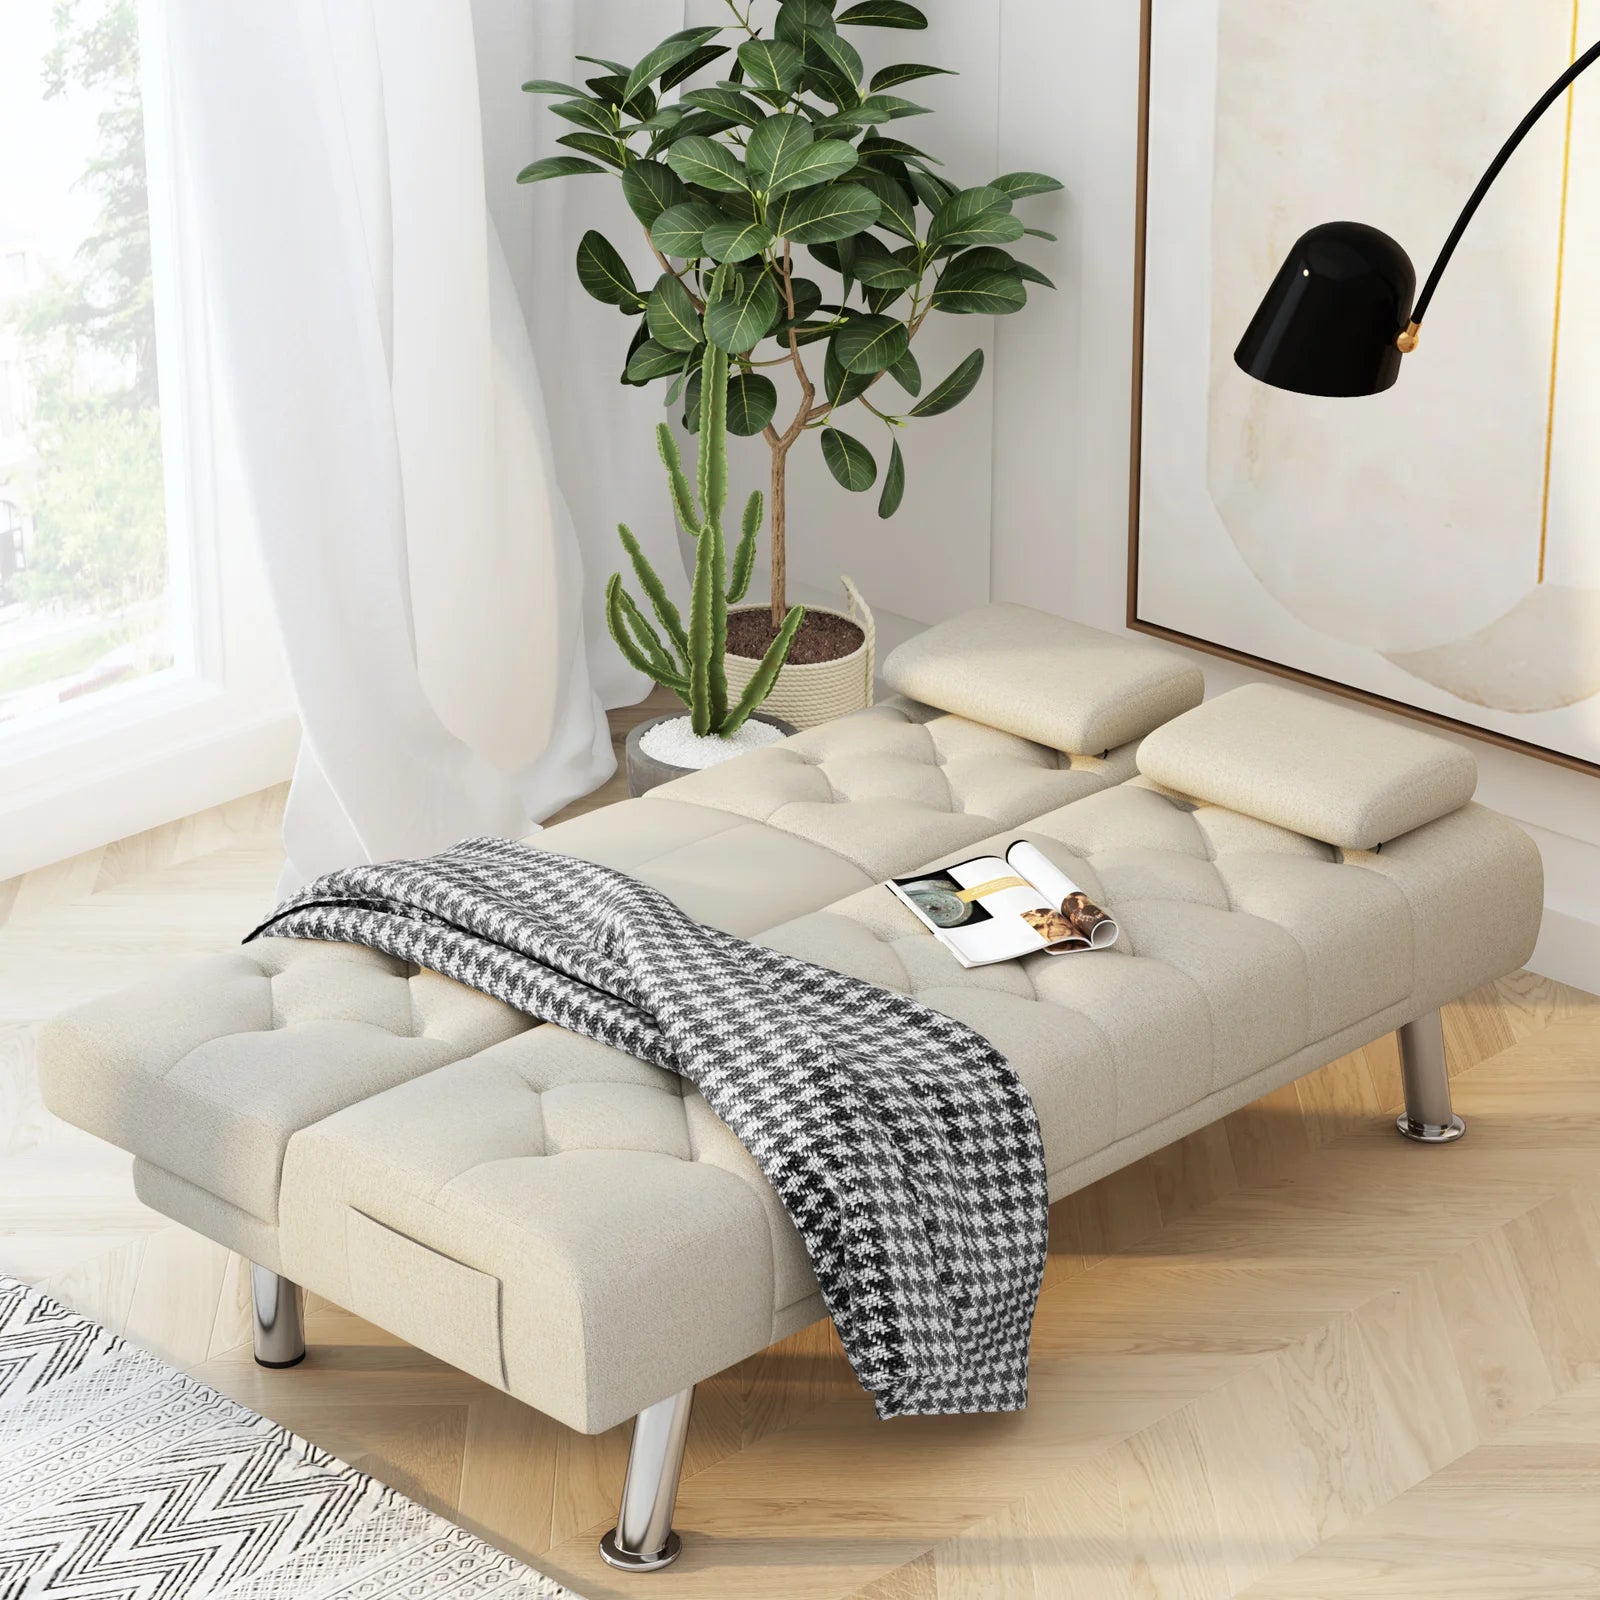 Sofa Bed: 66.3'' Upholstered L Shape Sofa Cum Bed